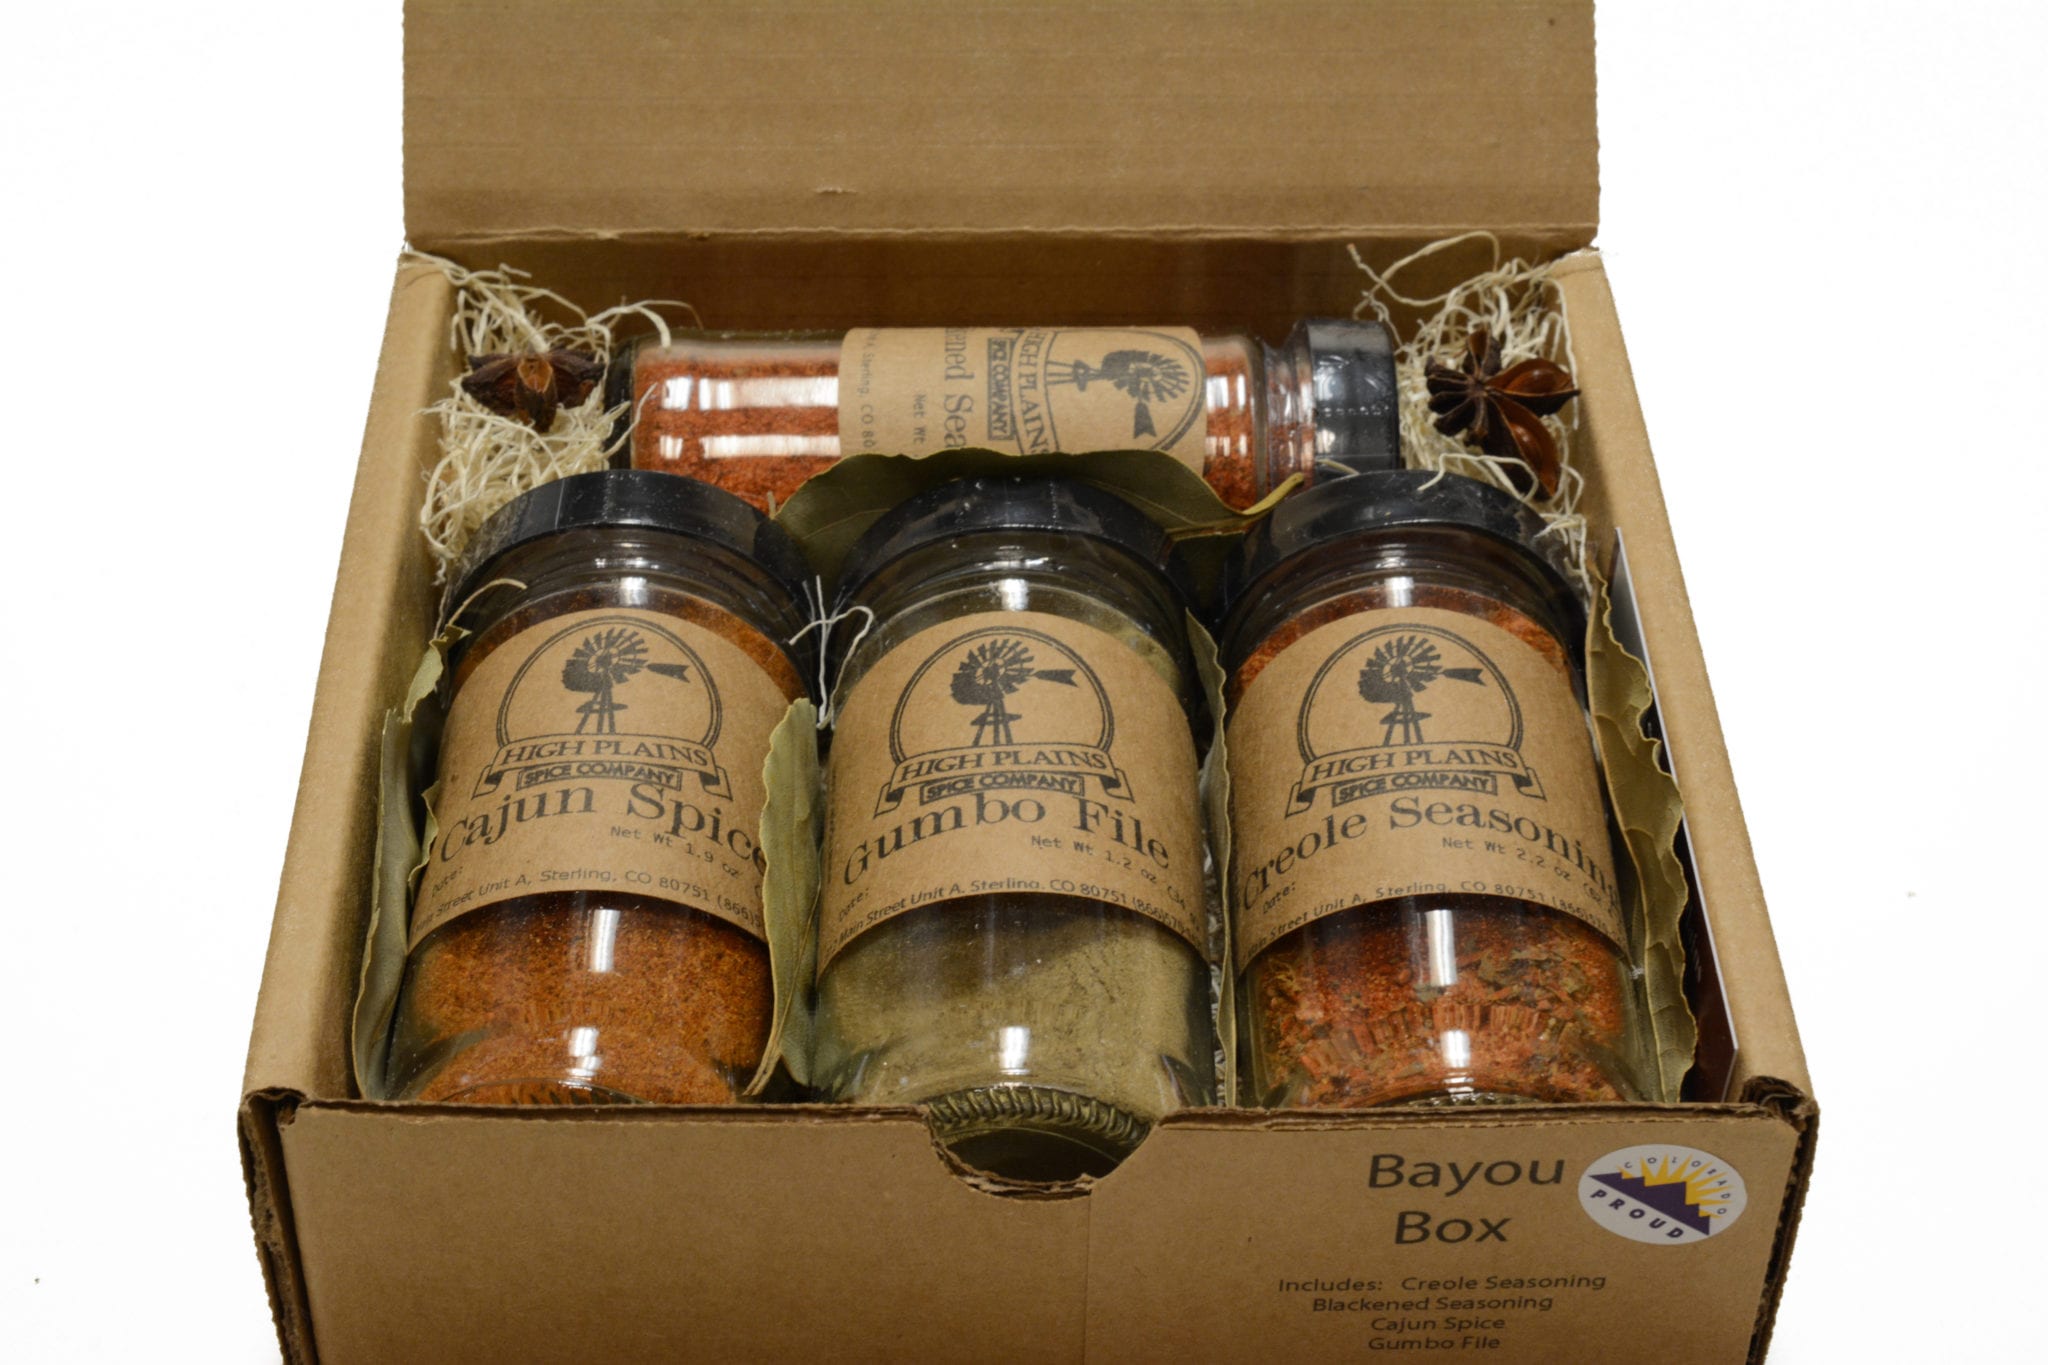 https://highplainsspicecompany.com/wp-content/uploads/2014/02/bayou-box-1-spice-rubs-gift-set-box-spices.jpg